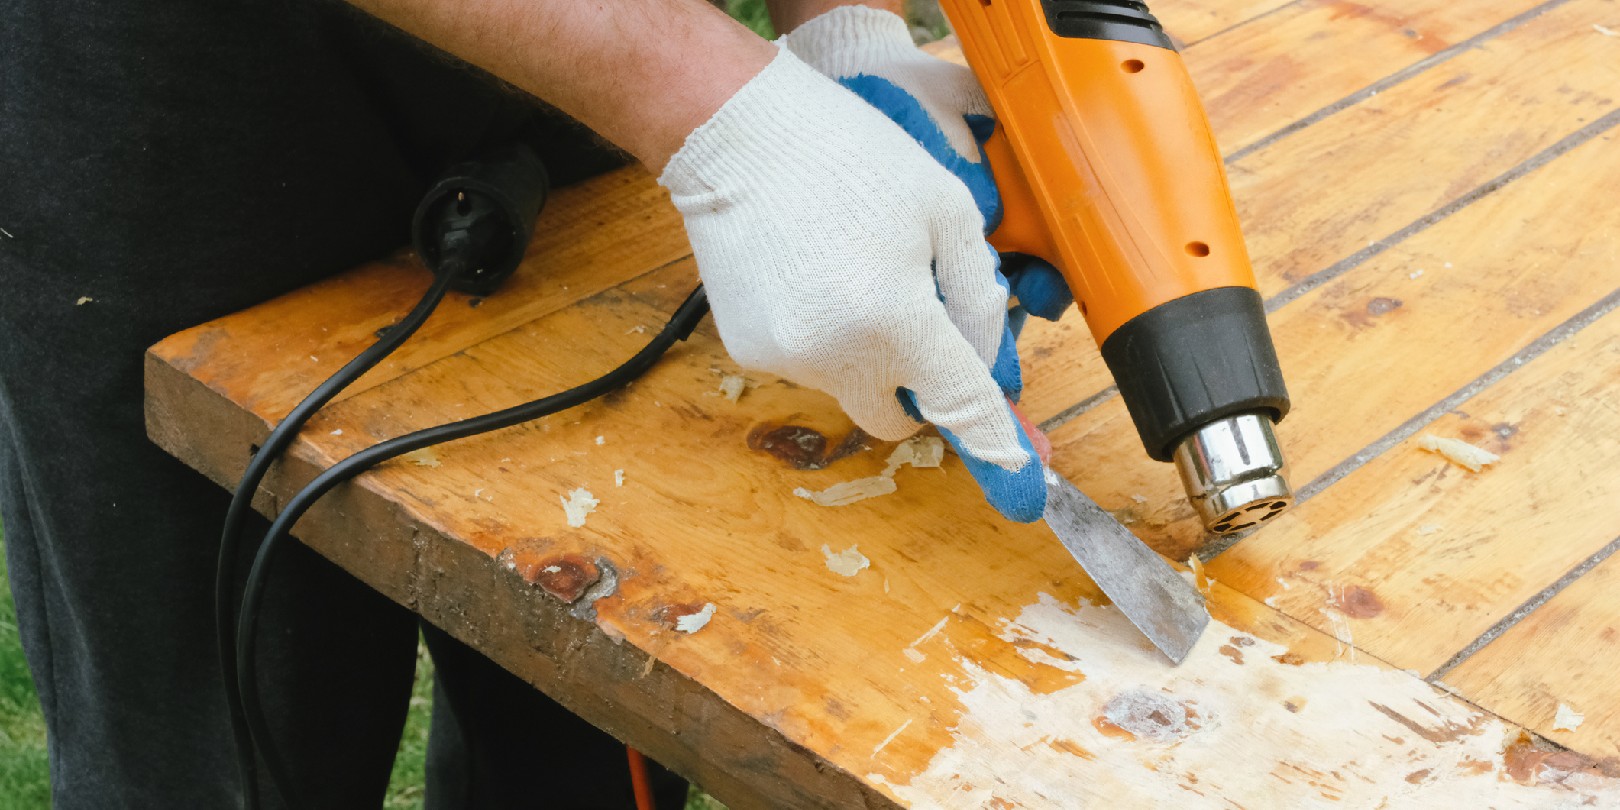 Man removing old varnish from wood using scraper and heat gun